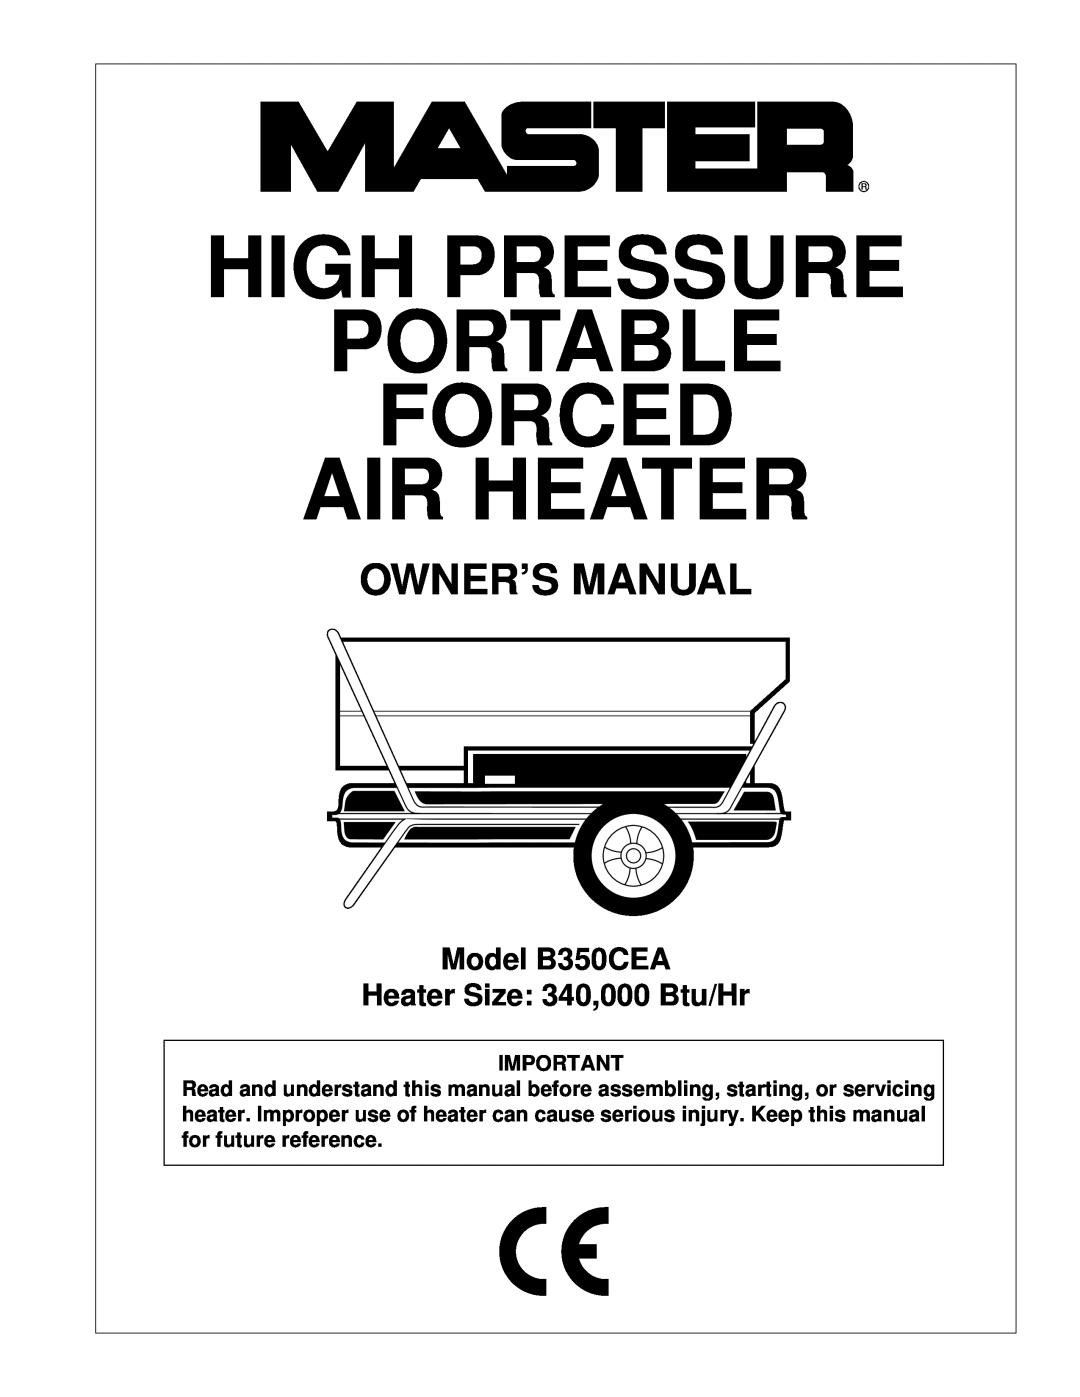 Desa owner manual Model B350CEA Heater Size 340,000 Btu/Hr, High Pressure Portable Forced Air Heater, Side Pfa/Pv 